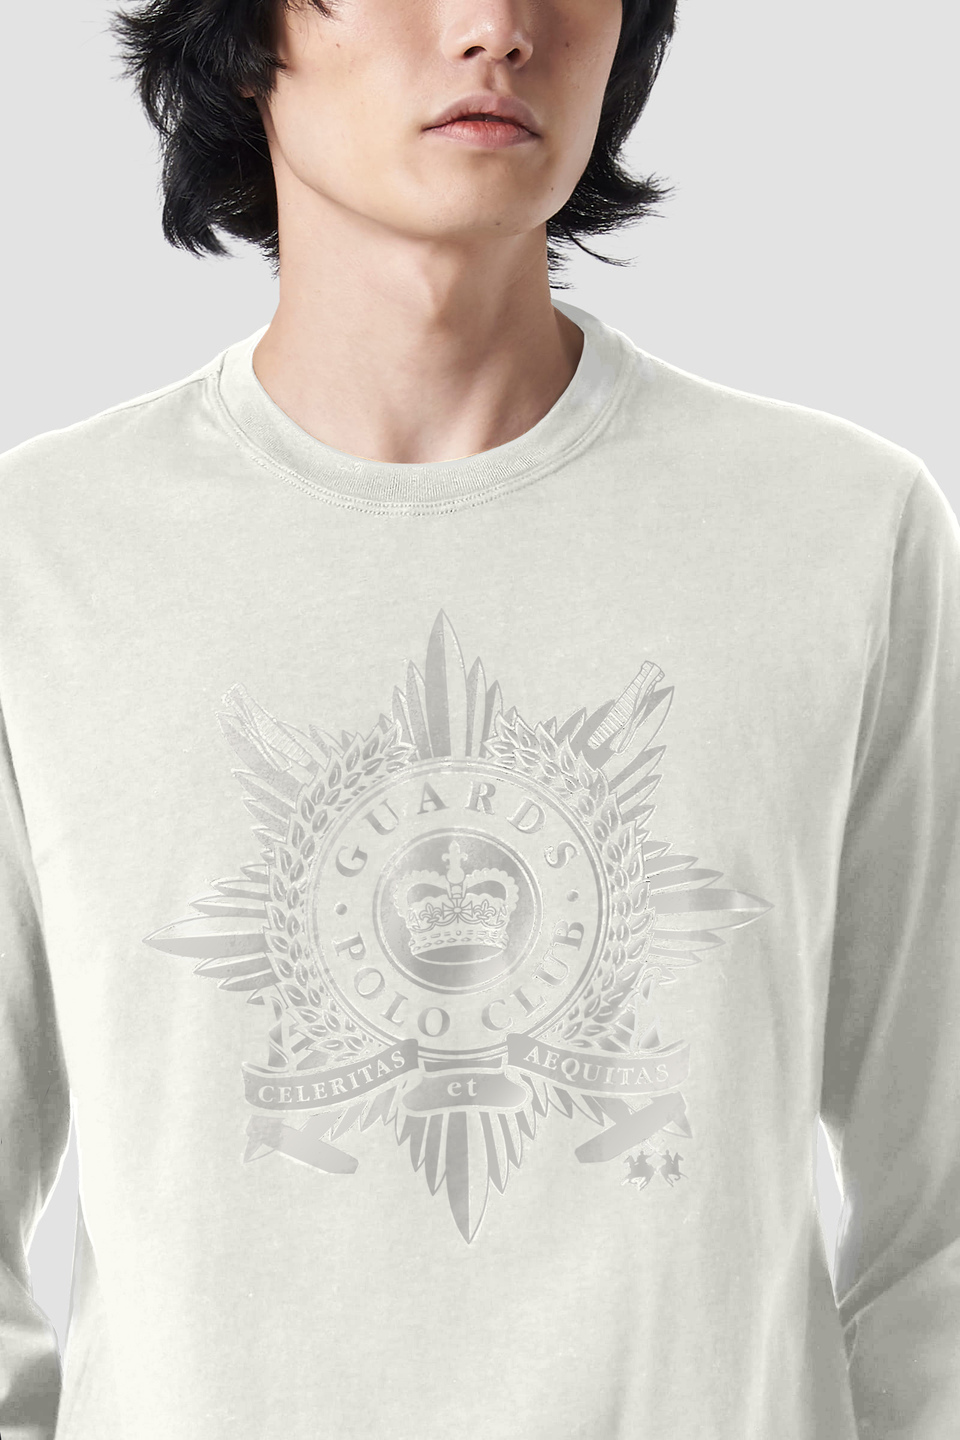 T-shirt imprimé en coton | La Martina - Official Online Shop